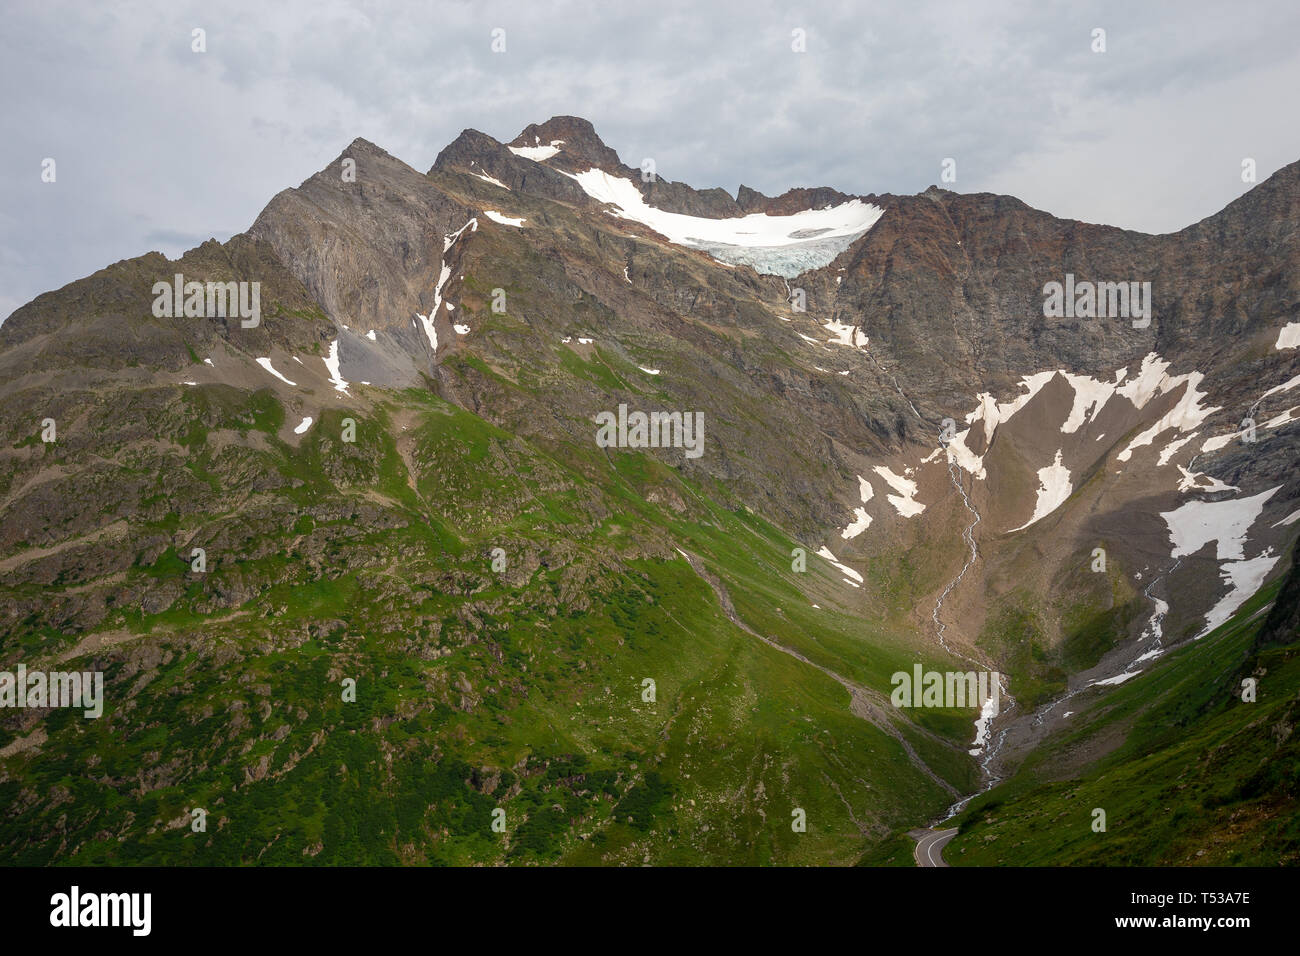 Stucklistock mountain, the Urner Alps, Uri, Switzerland. Europe. Stock Photo